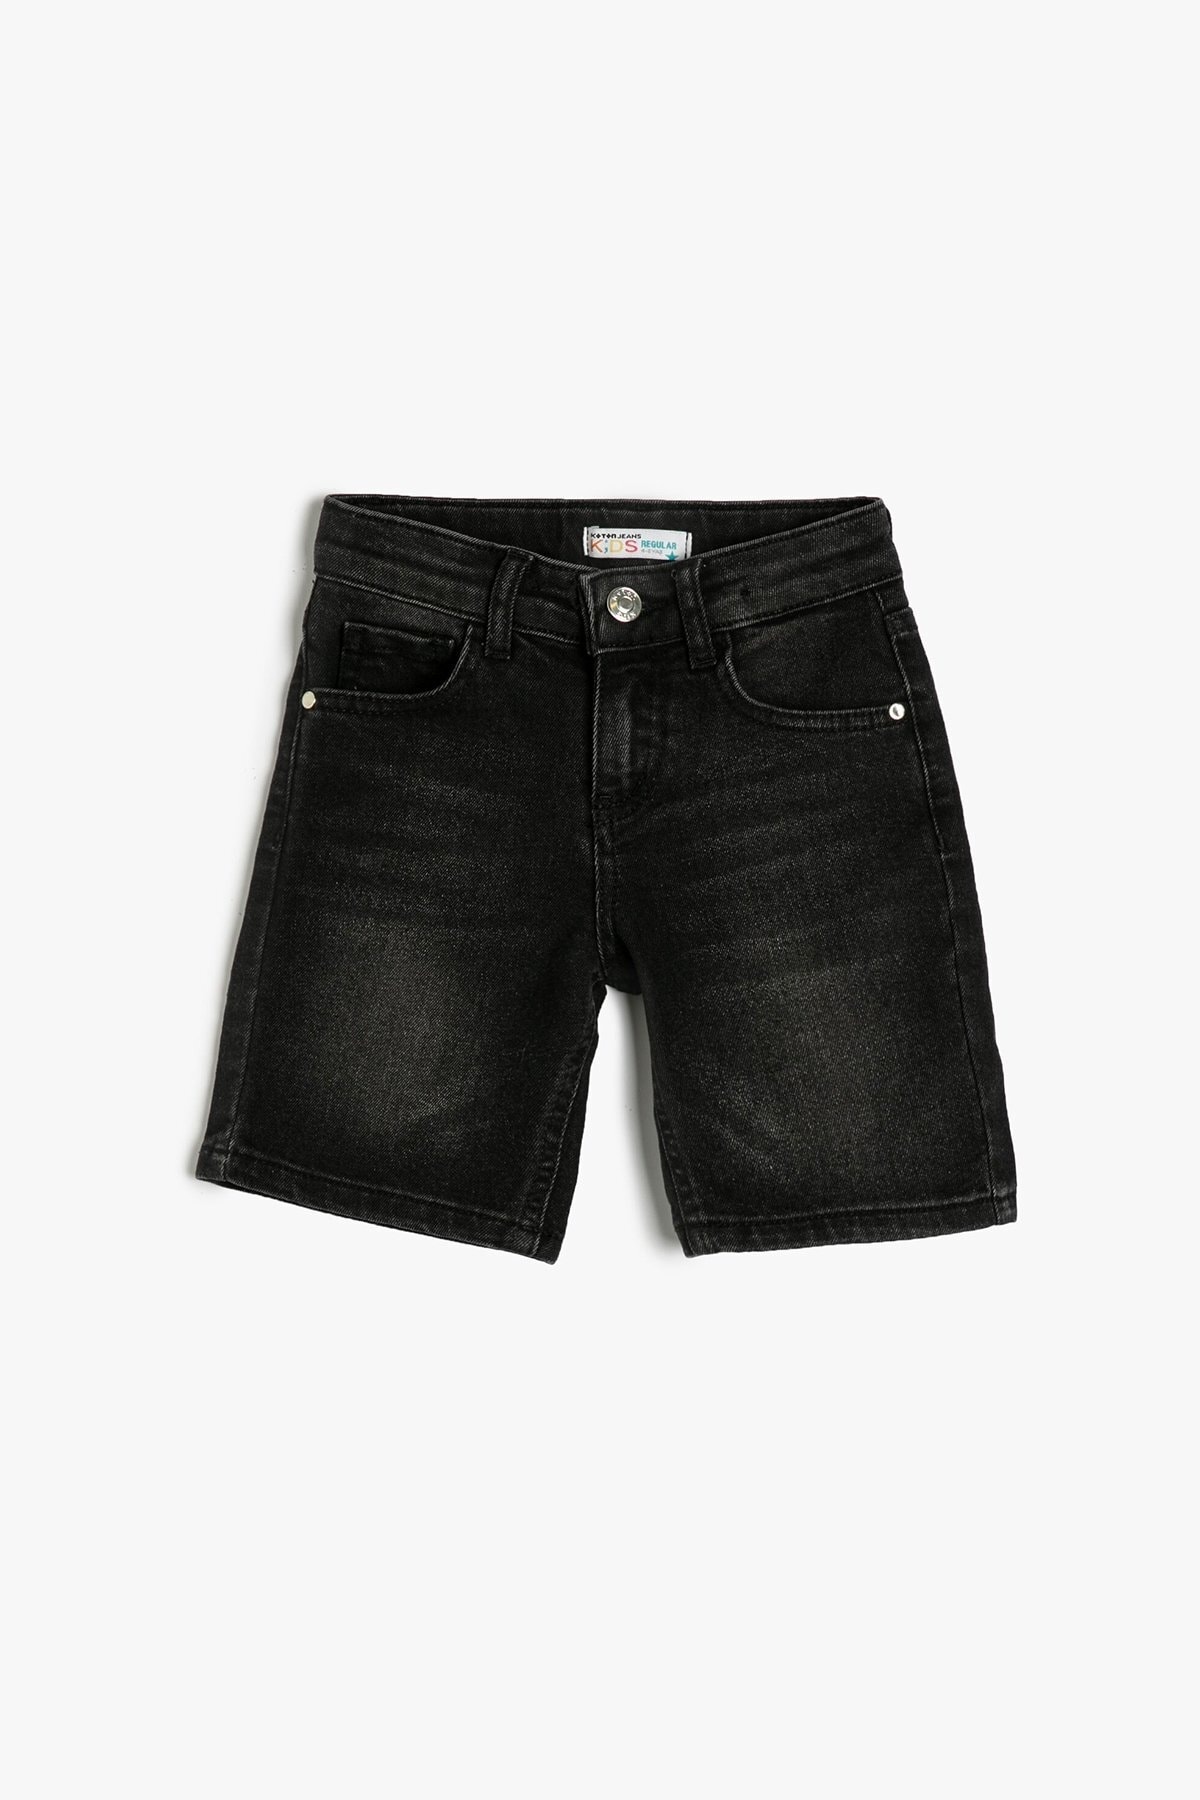 Levně Koton Denim Shorts With Pocket. Cotton - Regular Jeans with an Adjustable Elastic Waist.